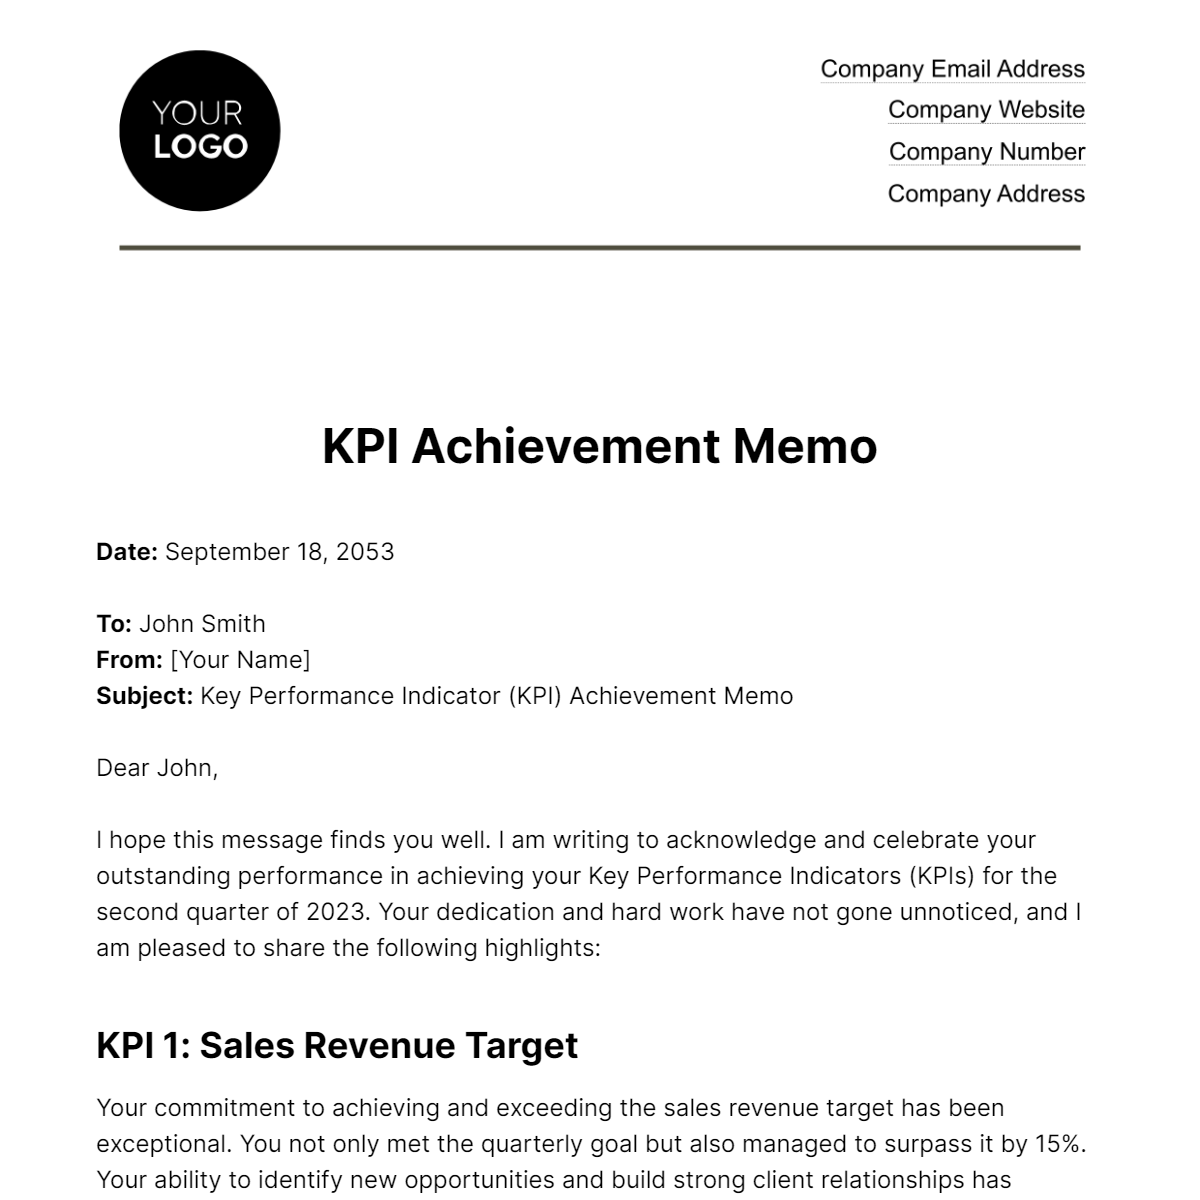 KPI Achievement Memo HR Template